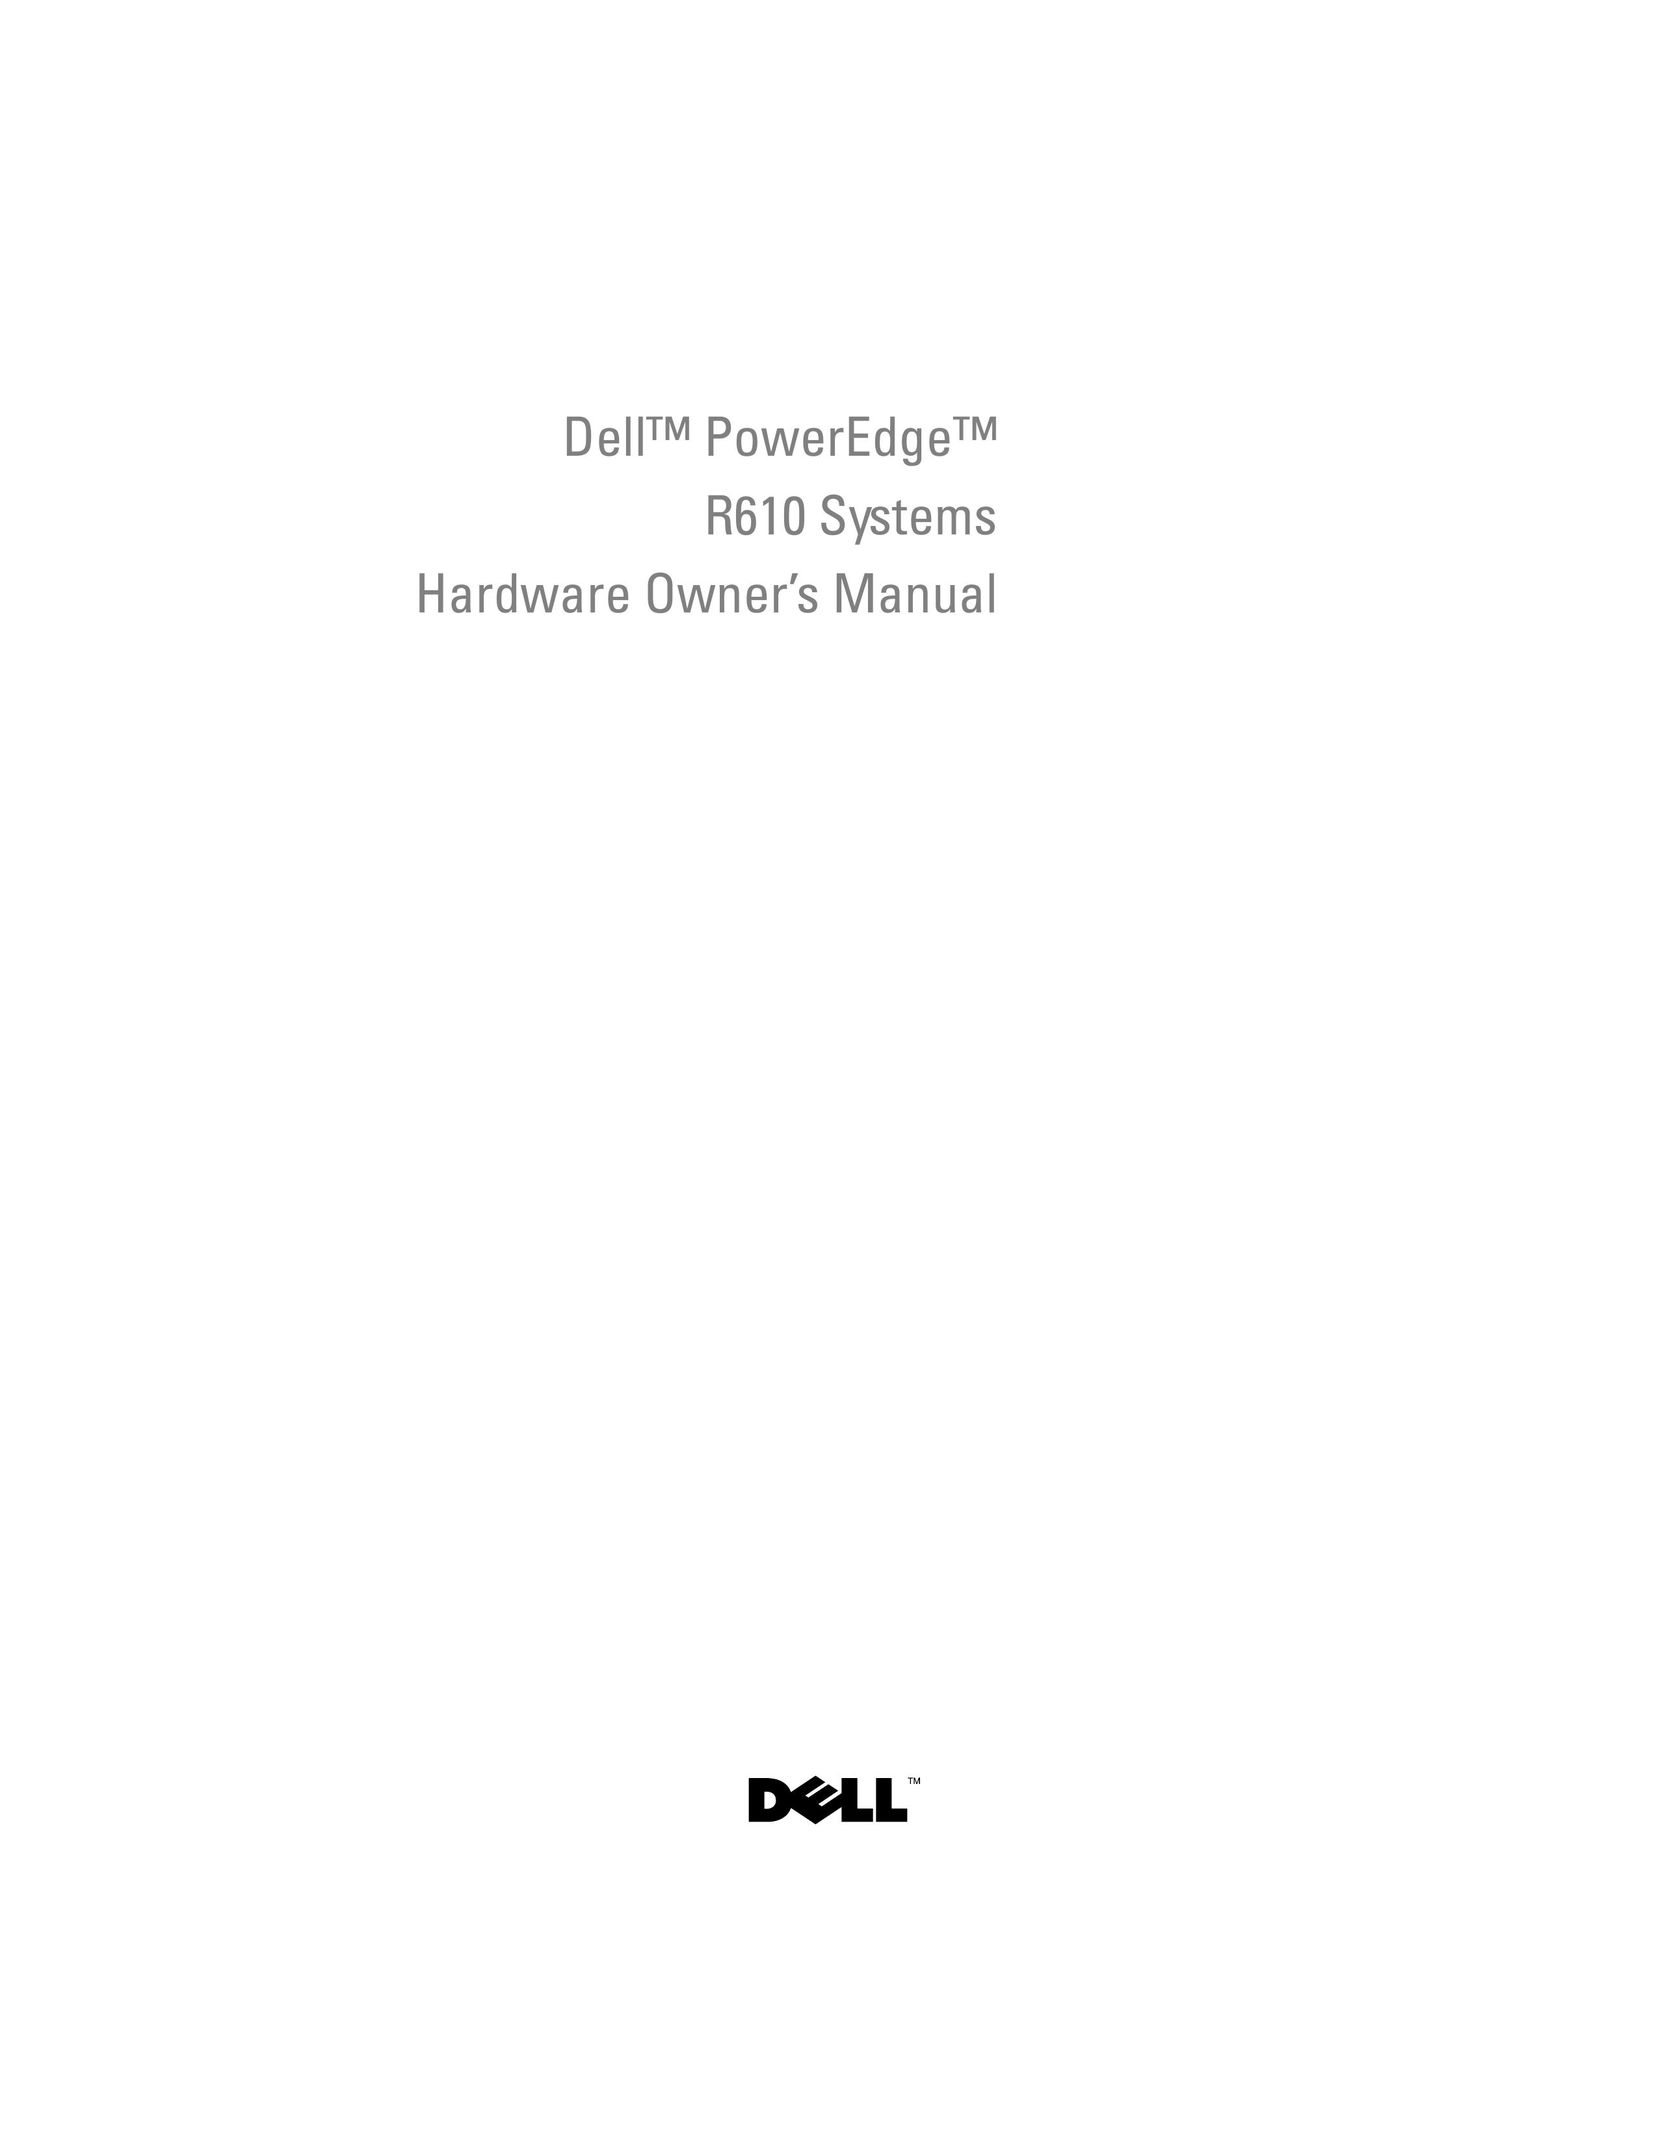 Dell R610 Home Theater Server User Manual